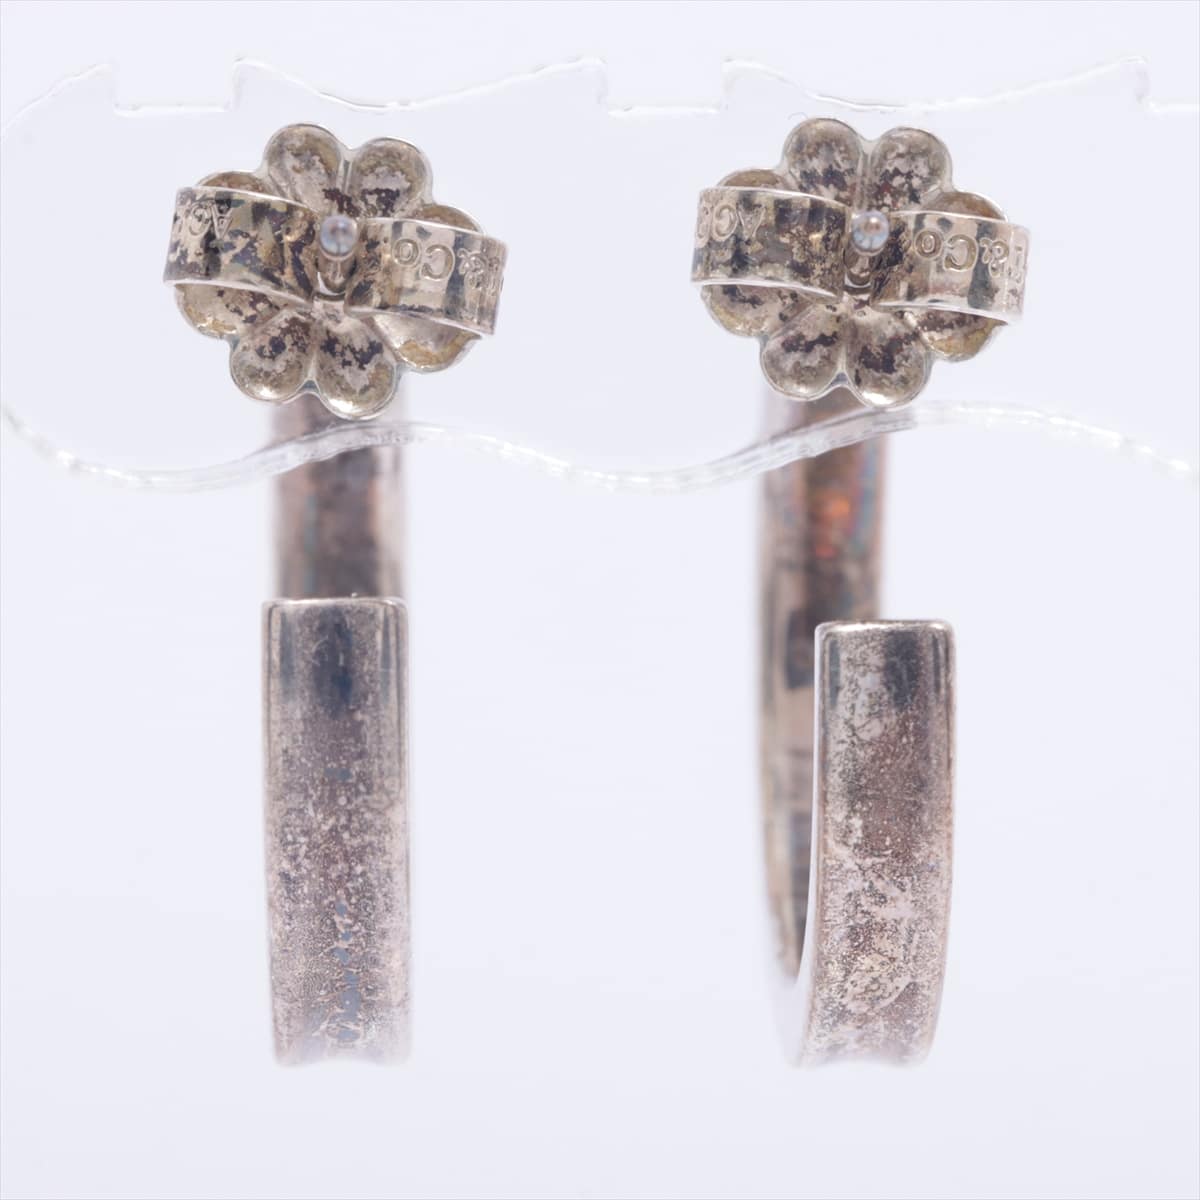 Tiffany 1837 Narrow Piercing jewelry (for both ears) 925 Silver